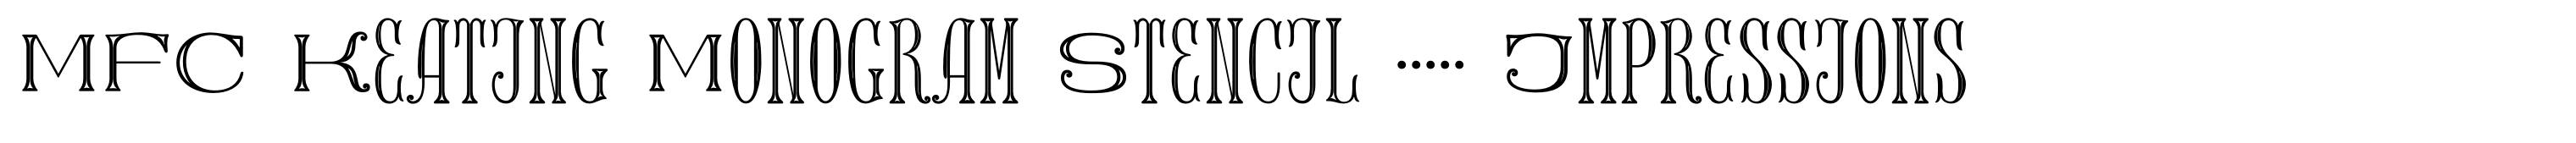 MFC Keating Monogram Stencil 10000 Impressions